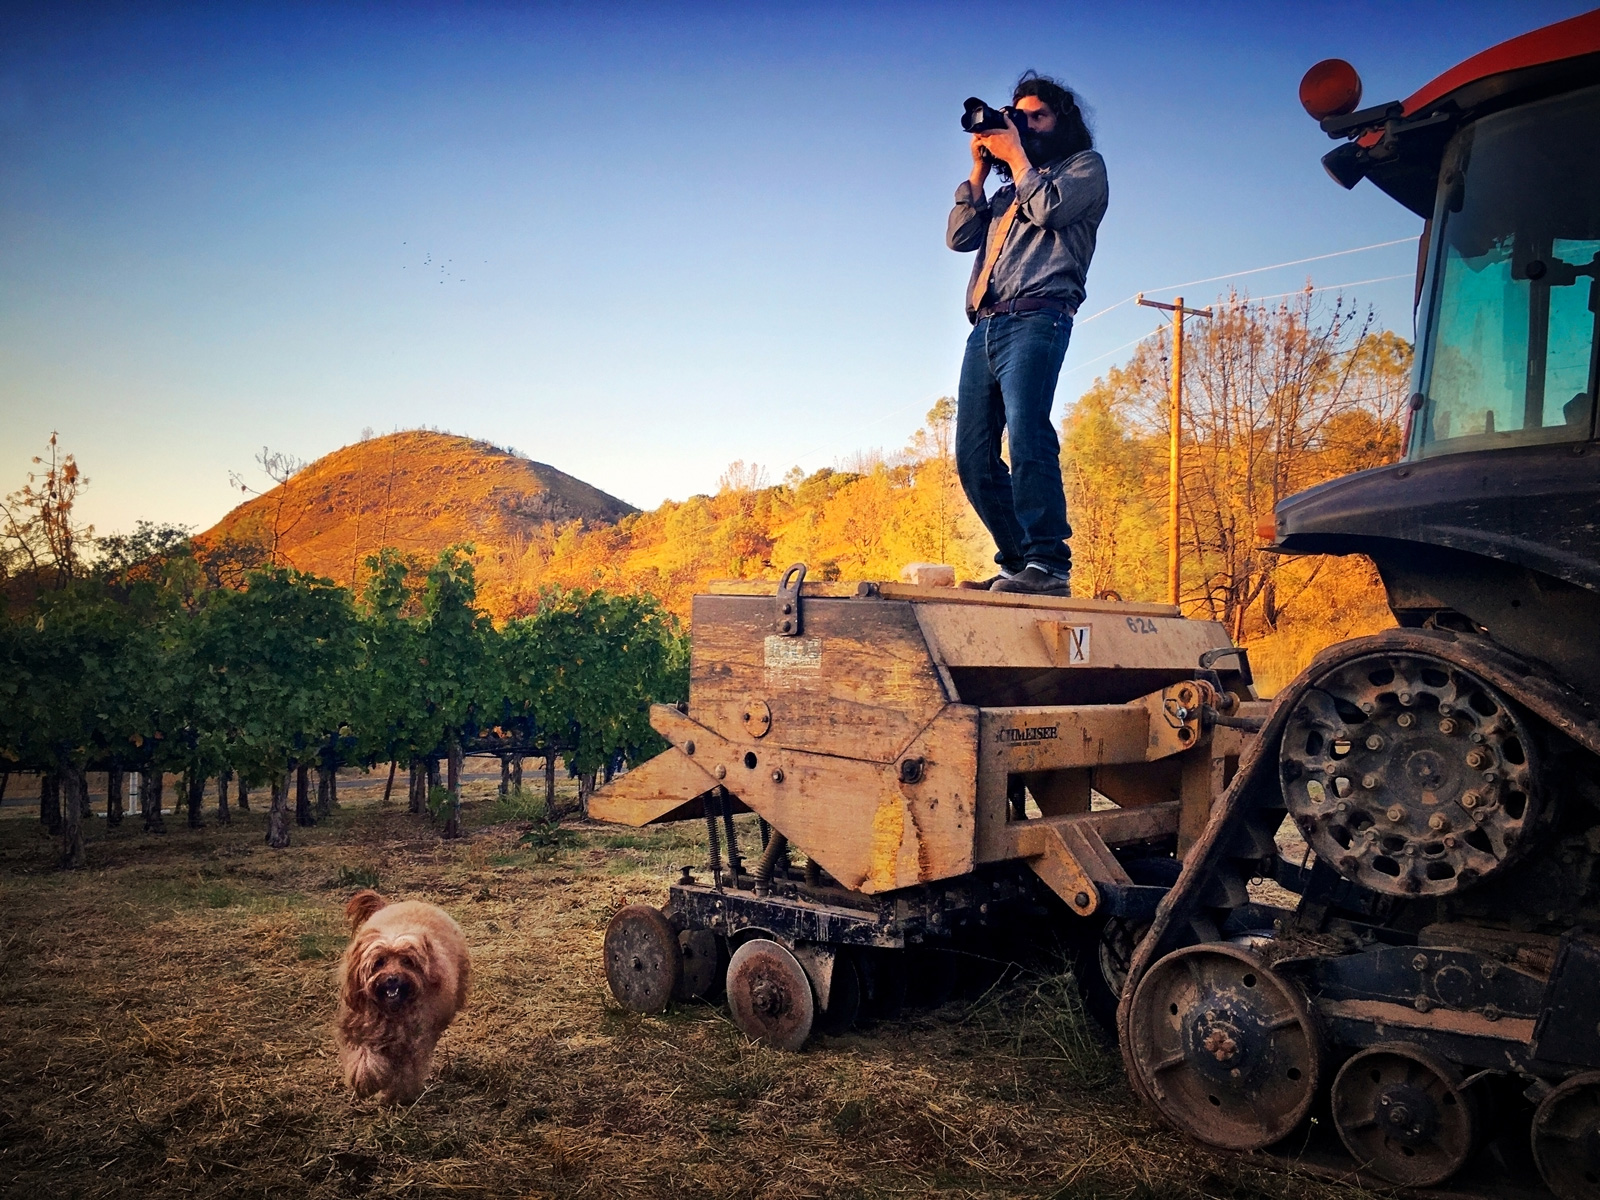 Stephen-Austin-Welch-director-photographer-bts-behind-the-scenes-walt-winery-tractor